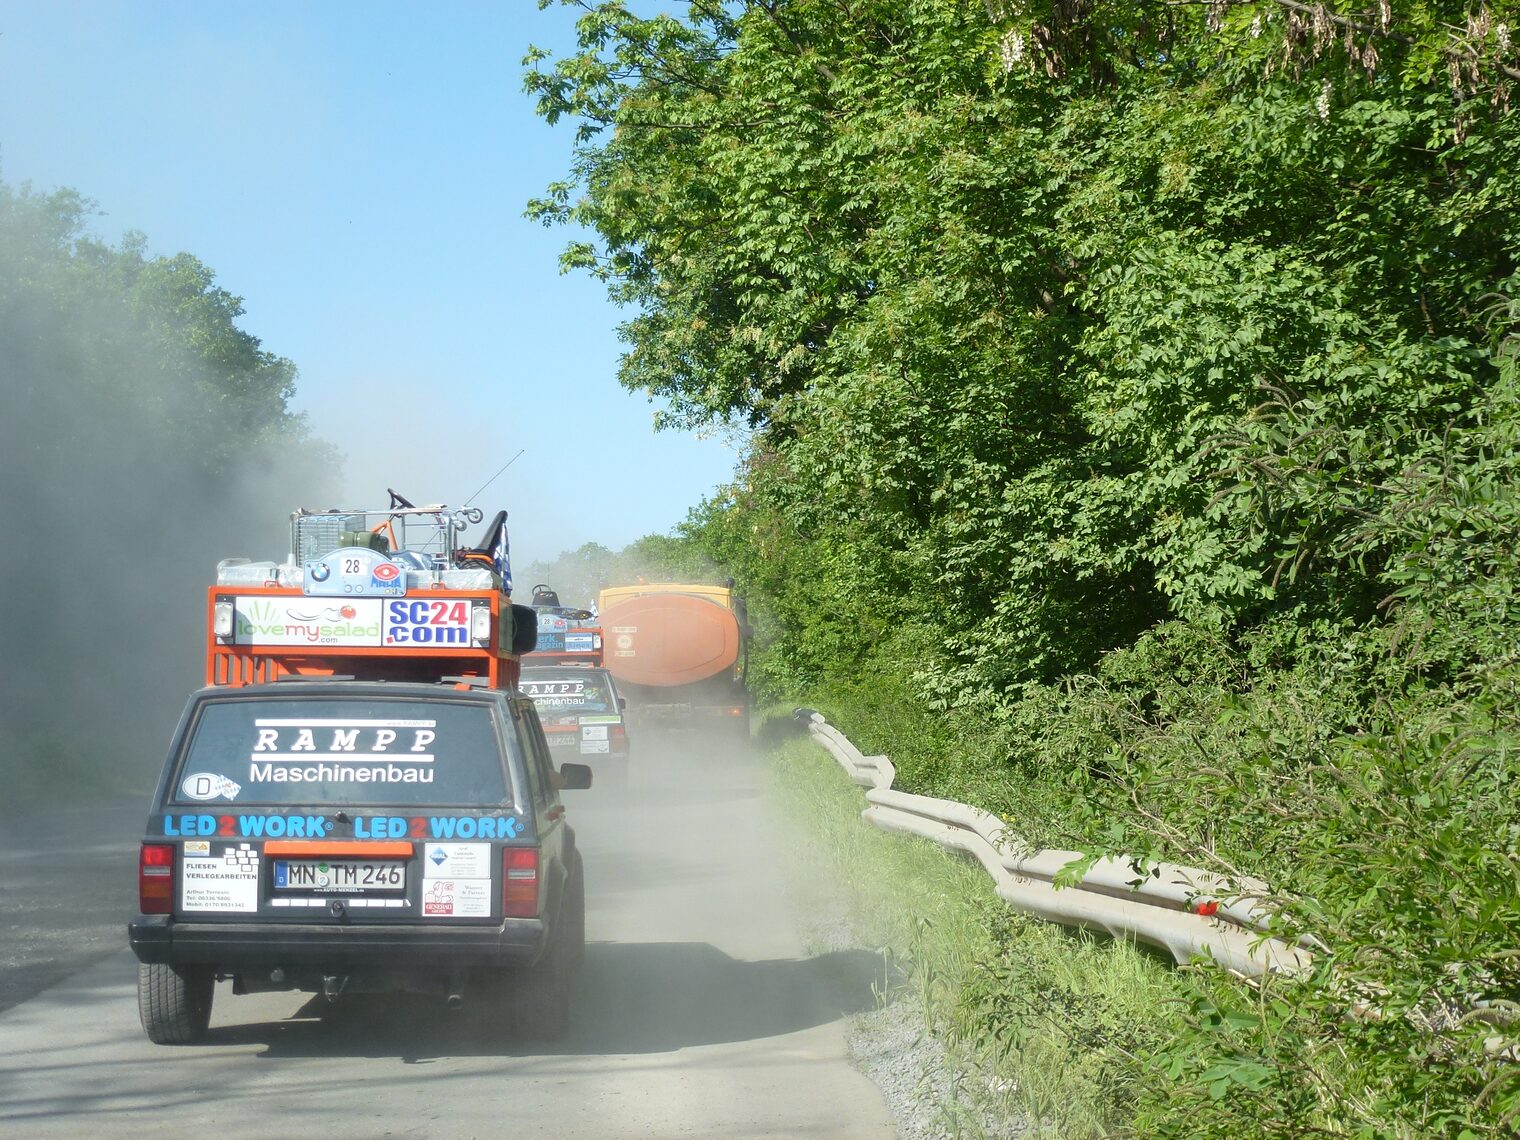 Allgäu-Orient-Rallye - Team "28 Mindeltal"